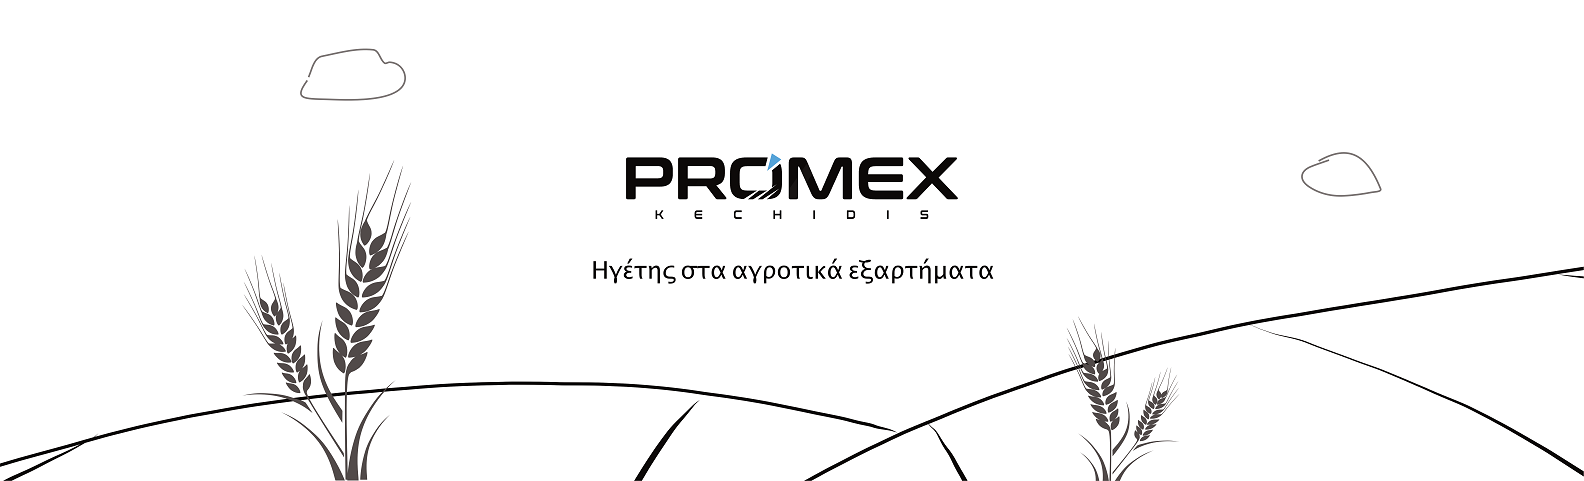 promex backround